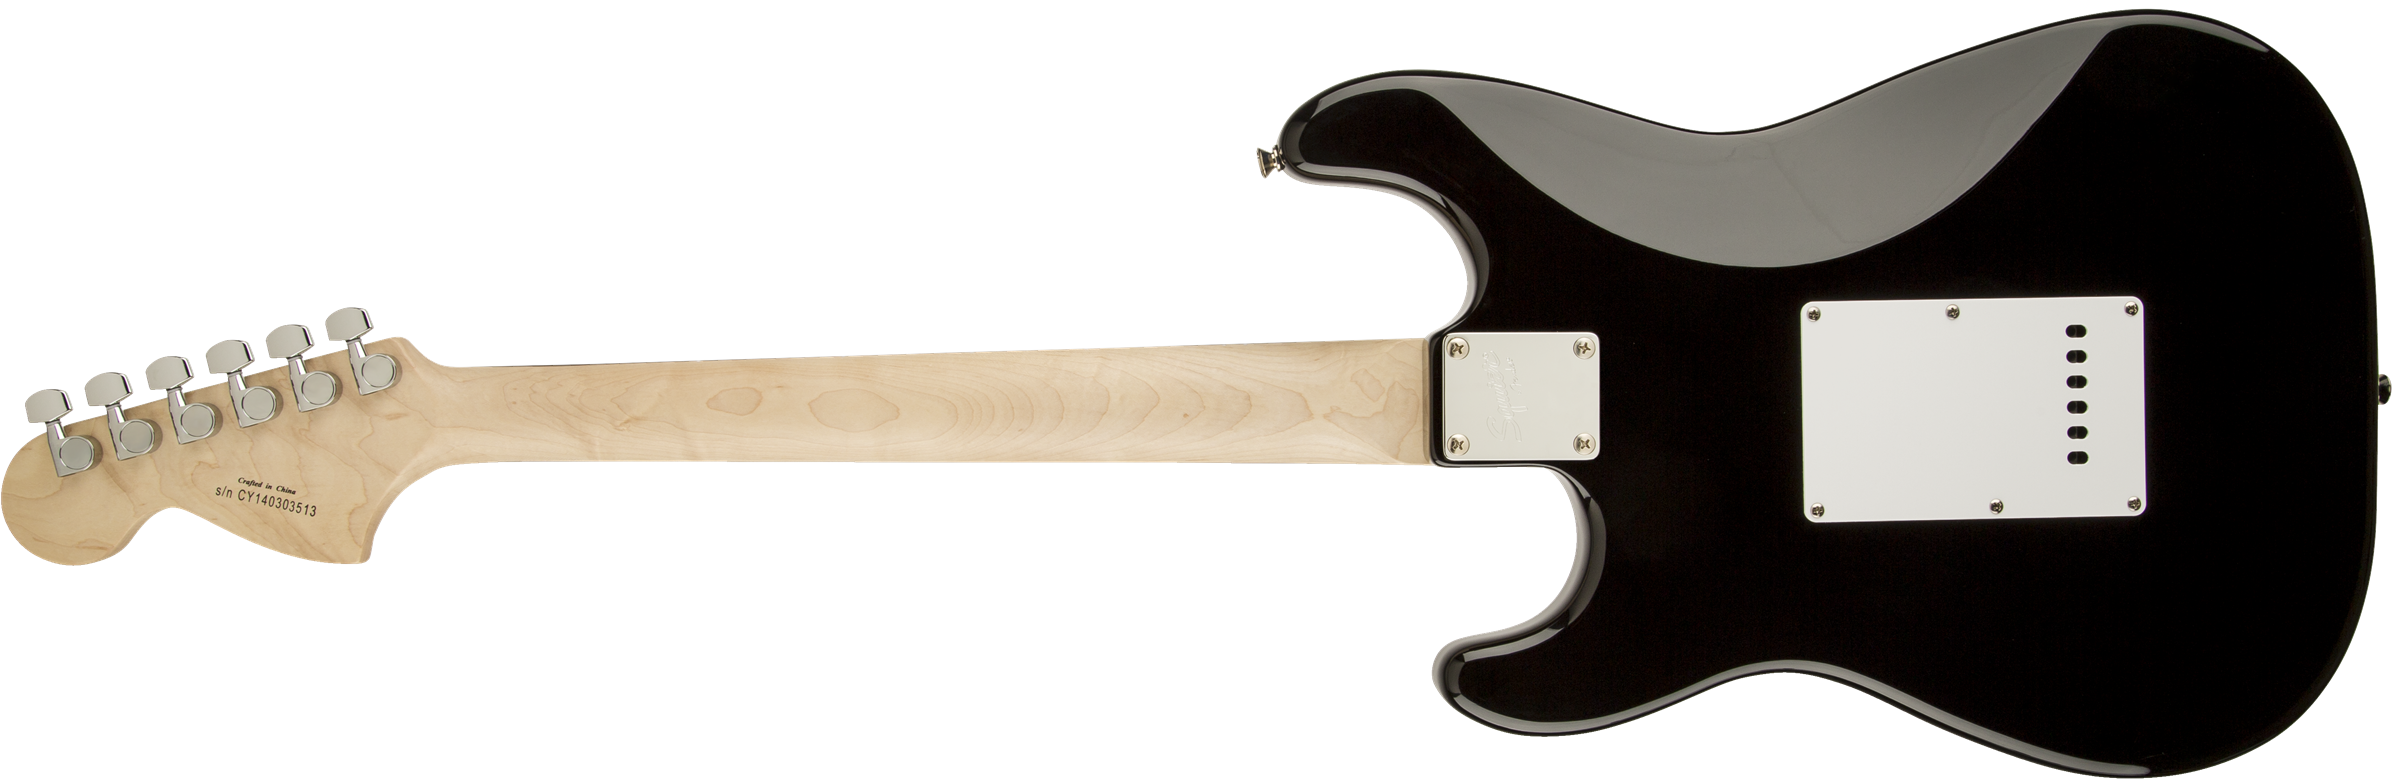 Squier Strat Affinity Series 3s Rw - Black - Str shape electric guitar - Variation 6